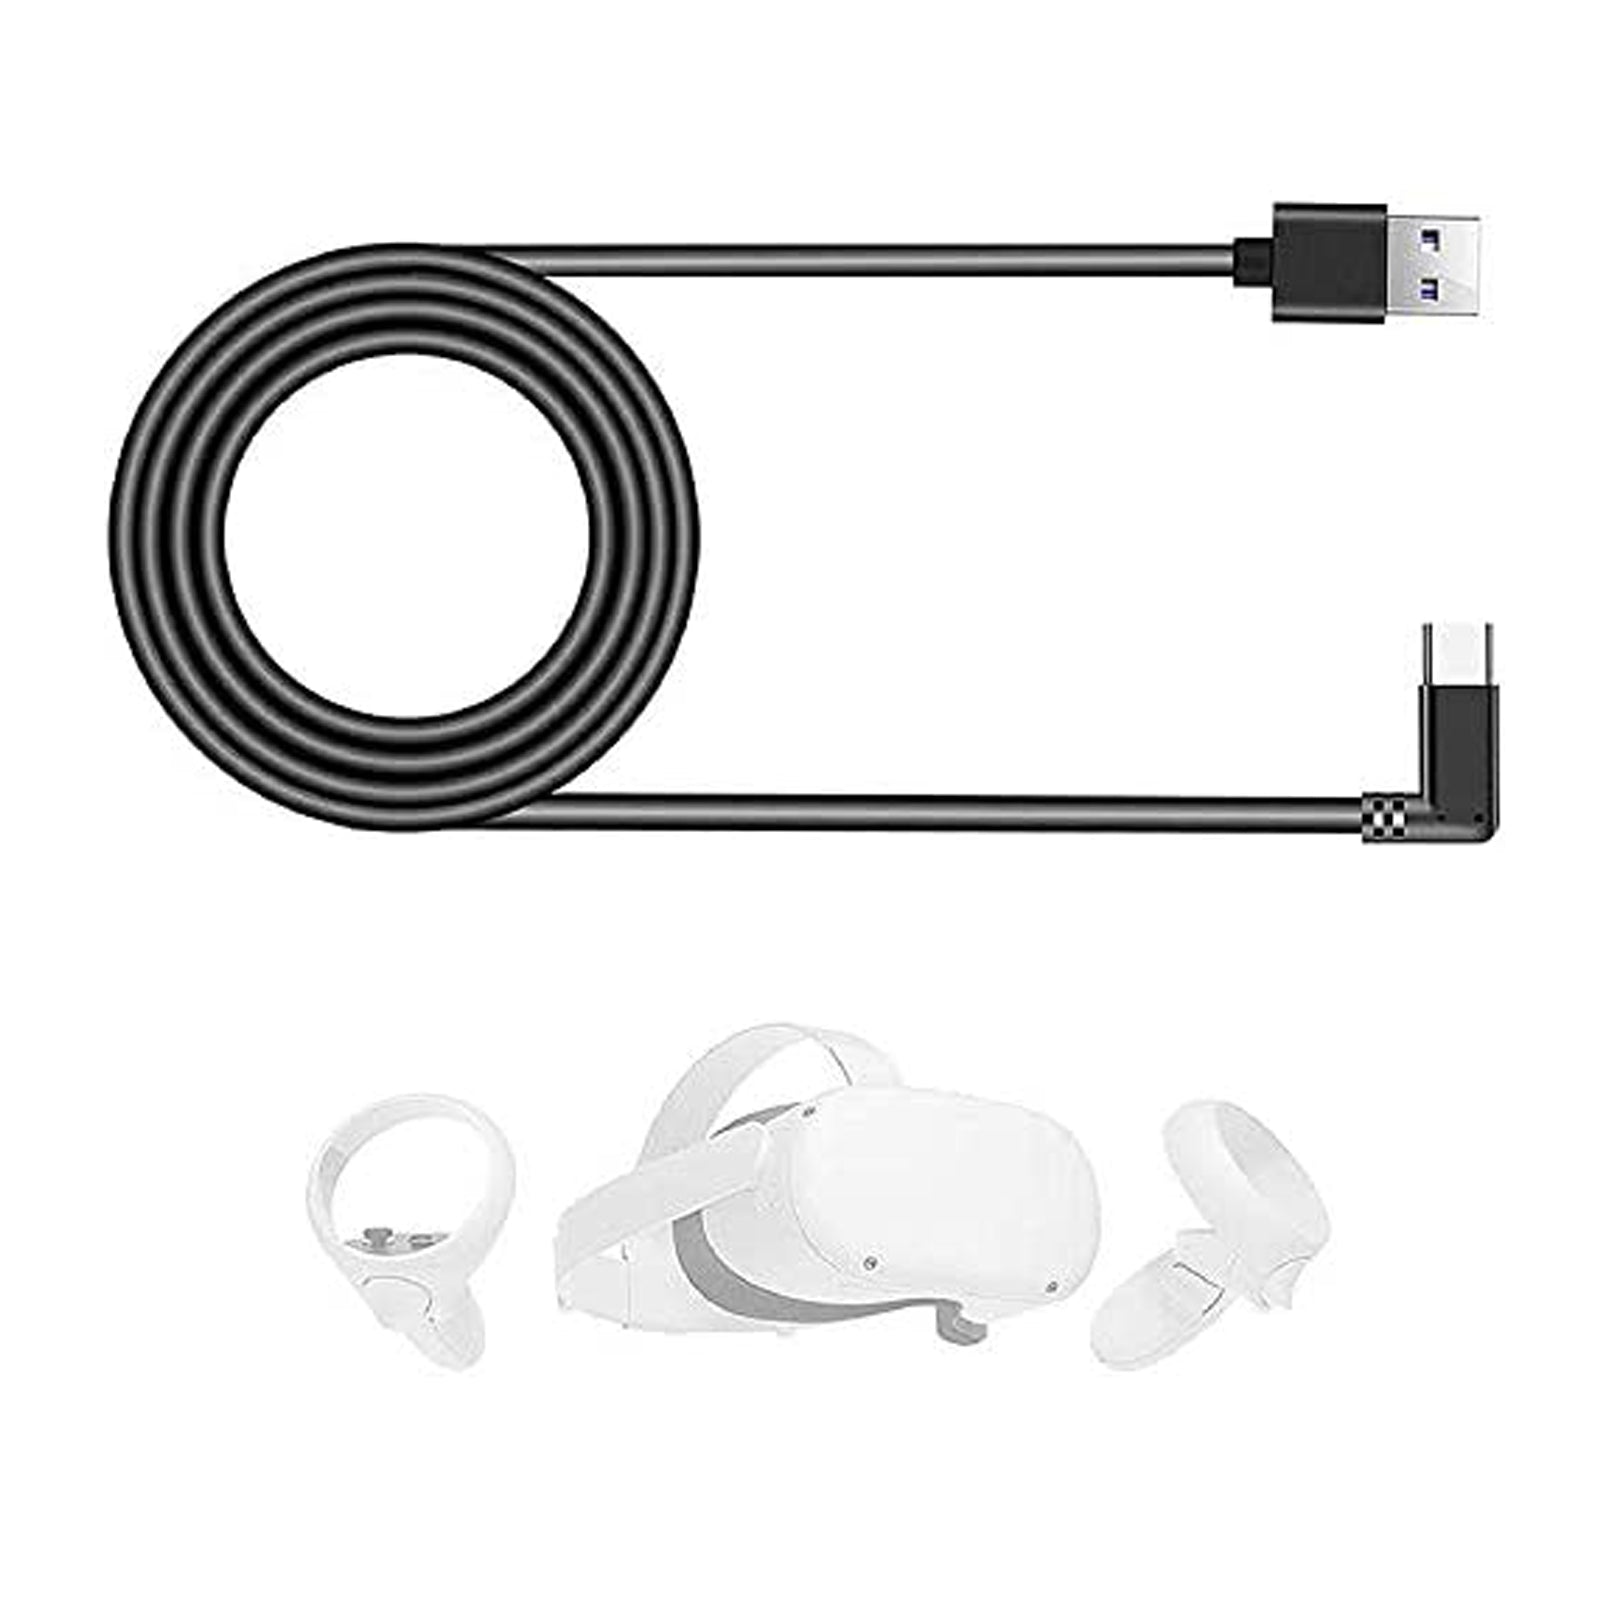 NexiGo dual usb-c cable for PS5 controller charger